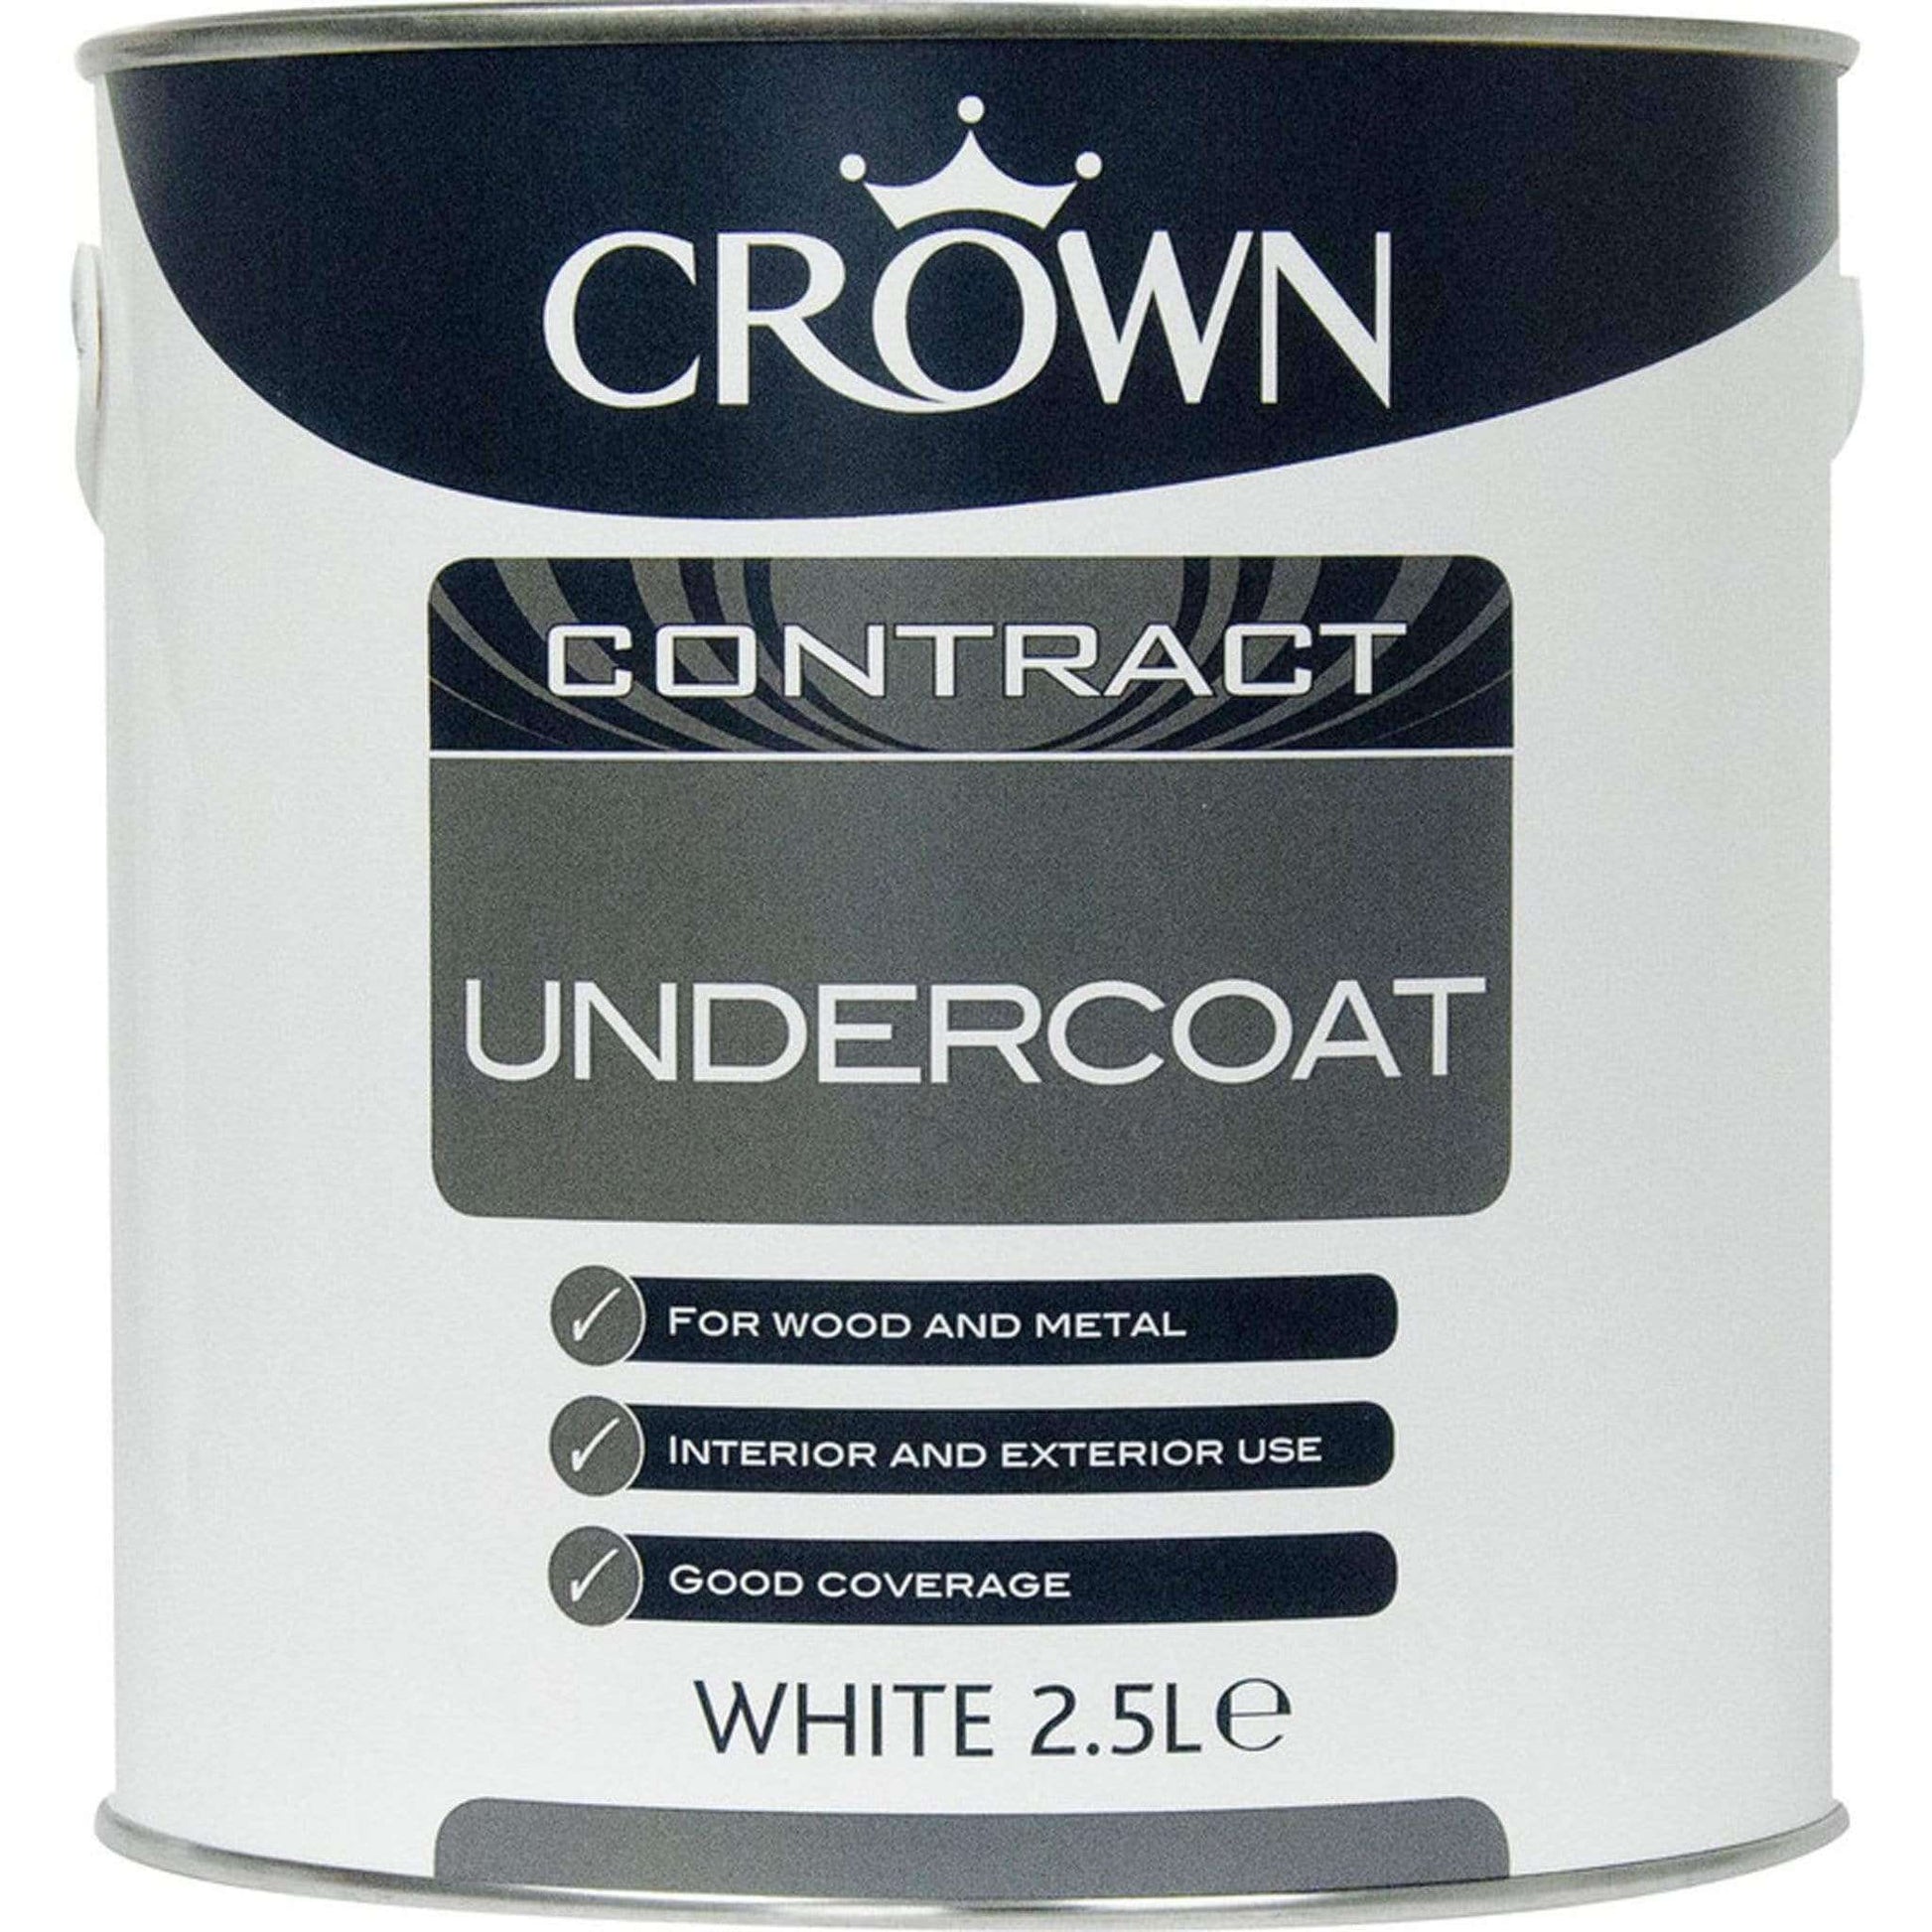 Paint  -  Crown Contract Undercoat White 2.5L  -  50145645